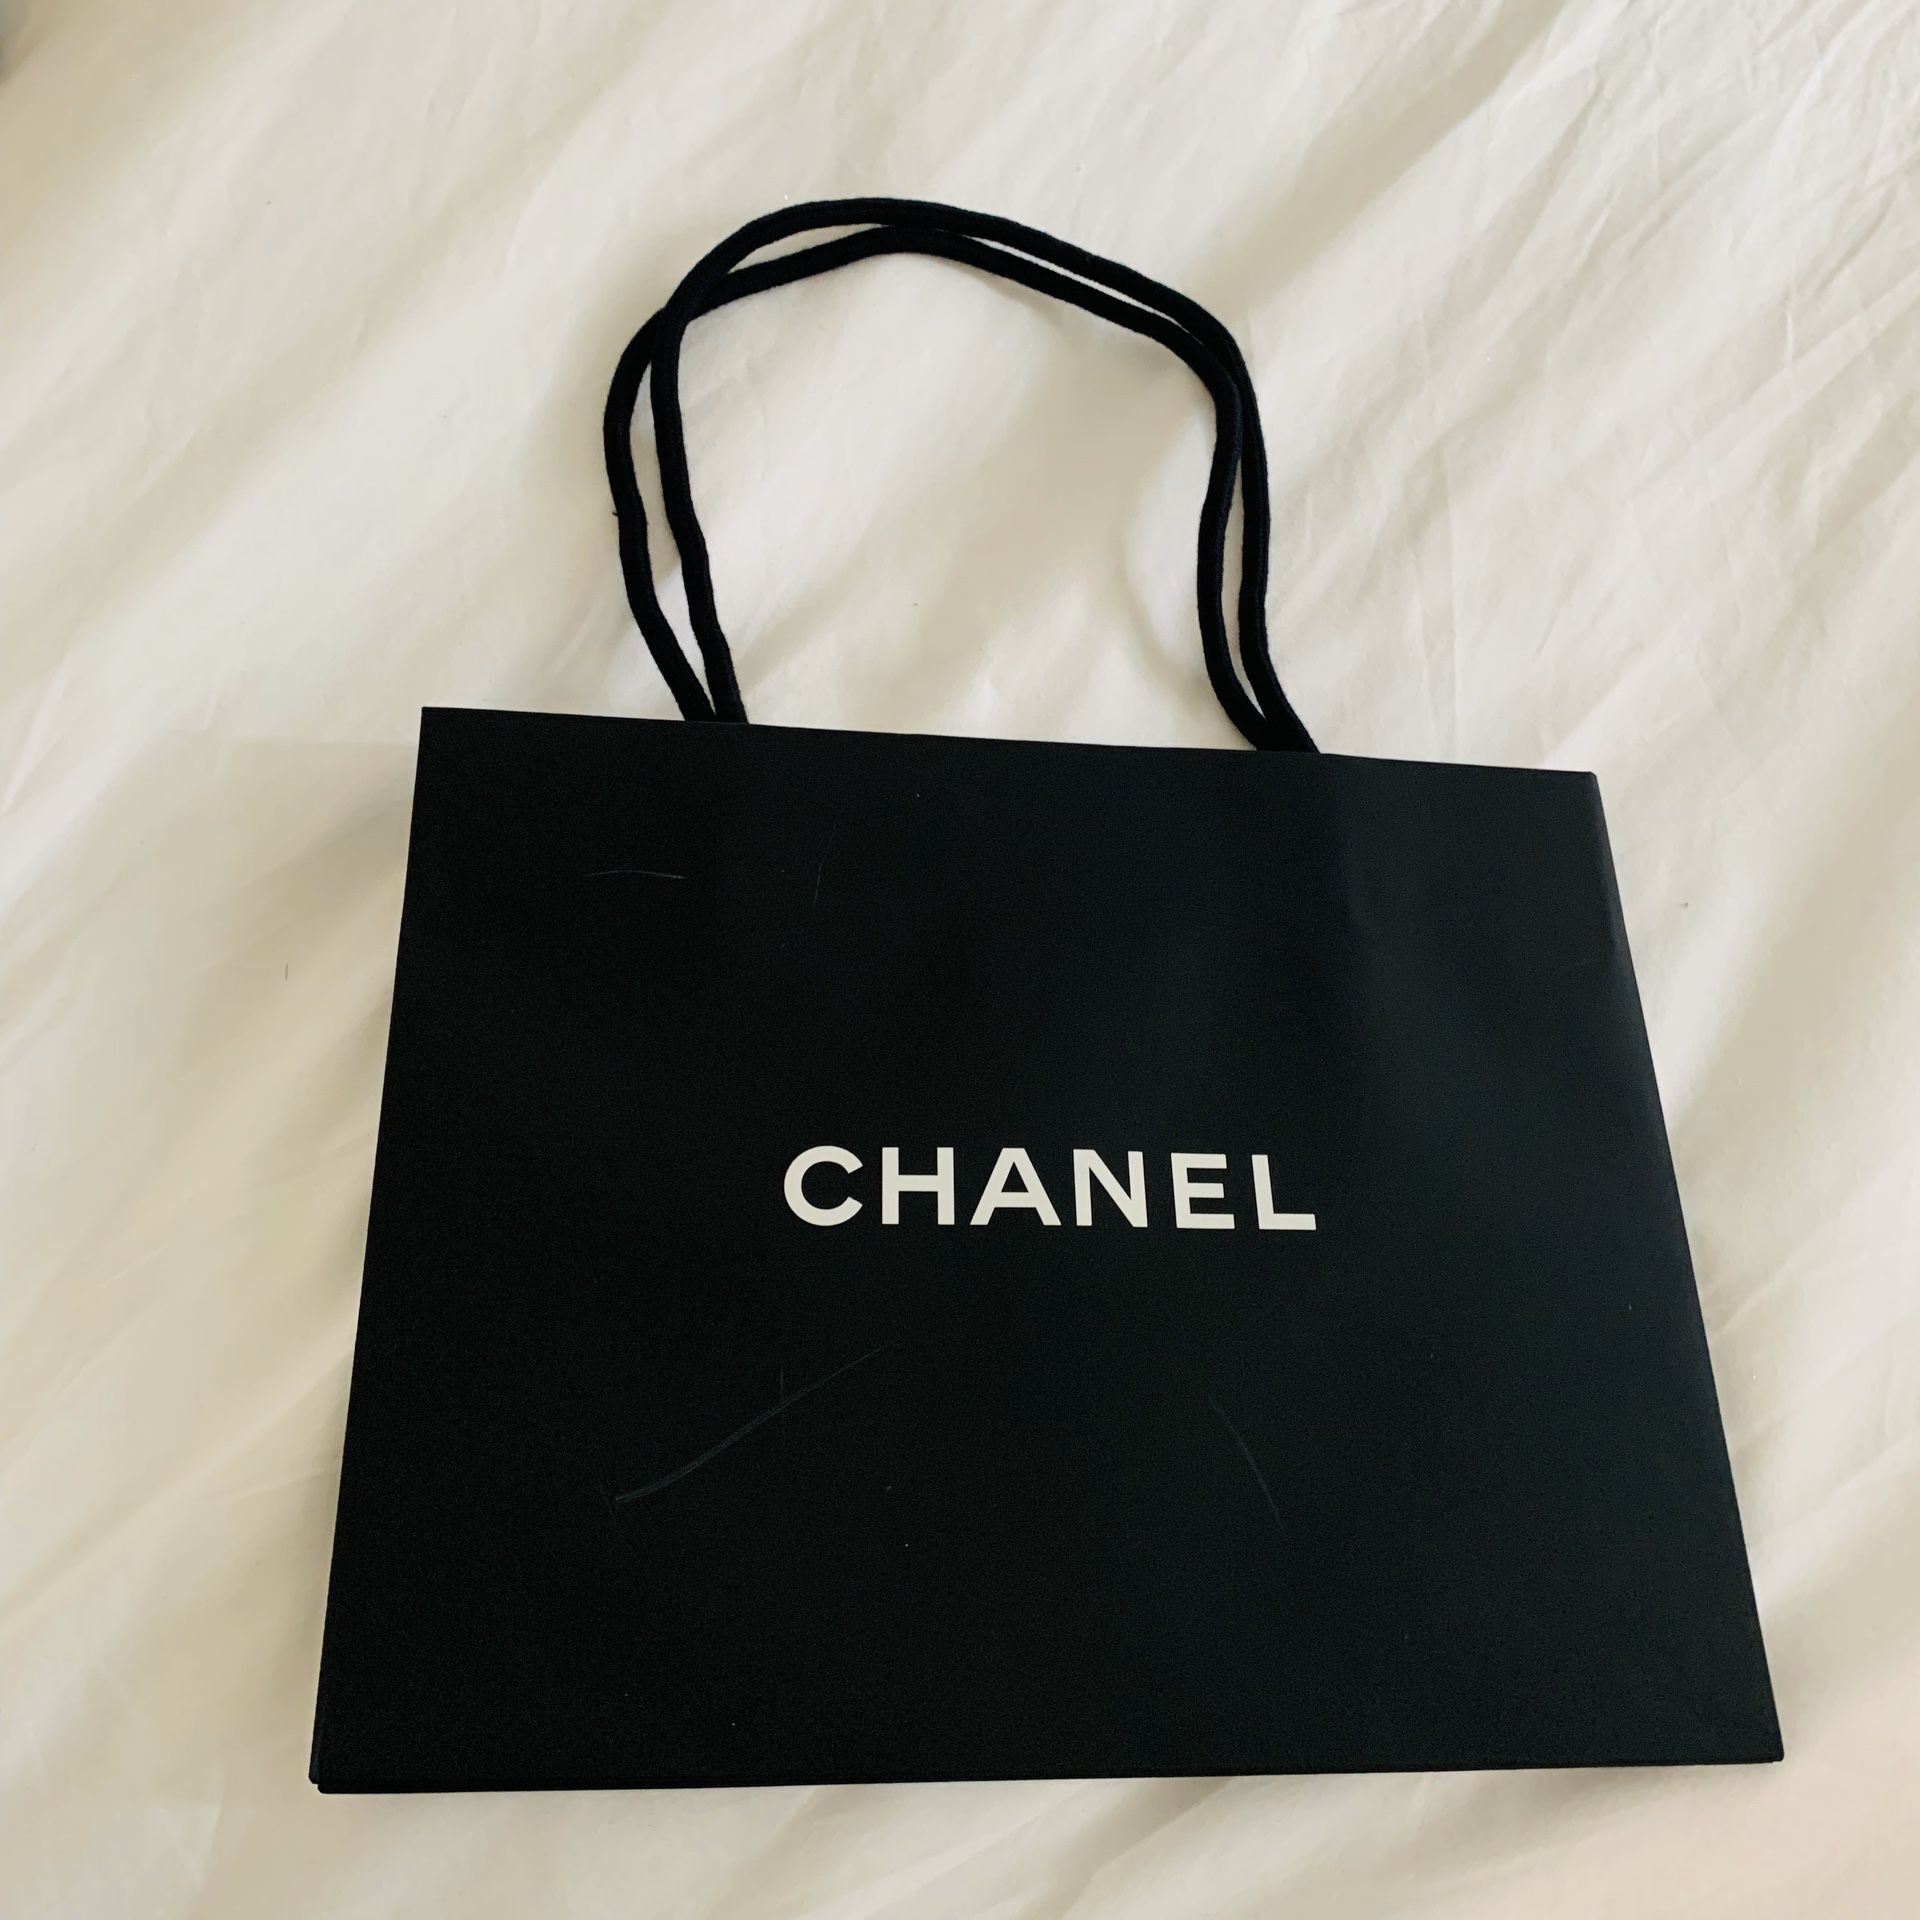 Chanel bag paper bag gift supplant